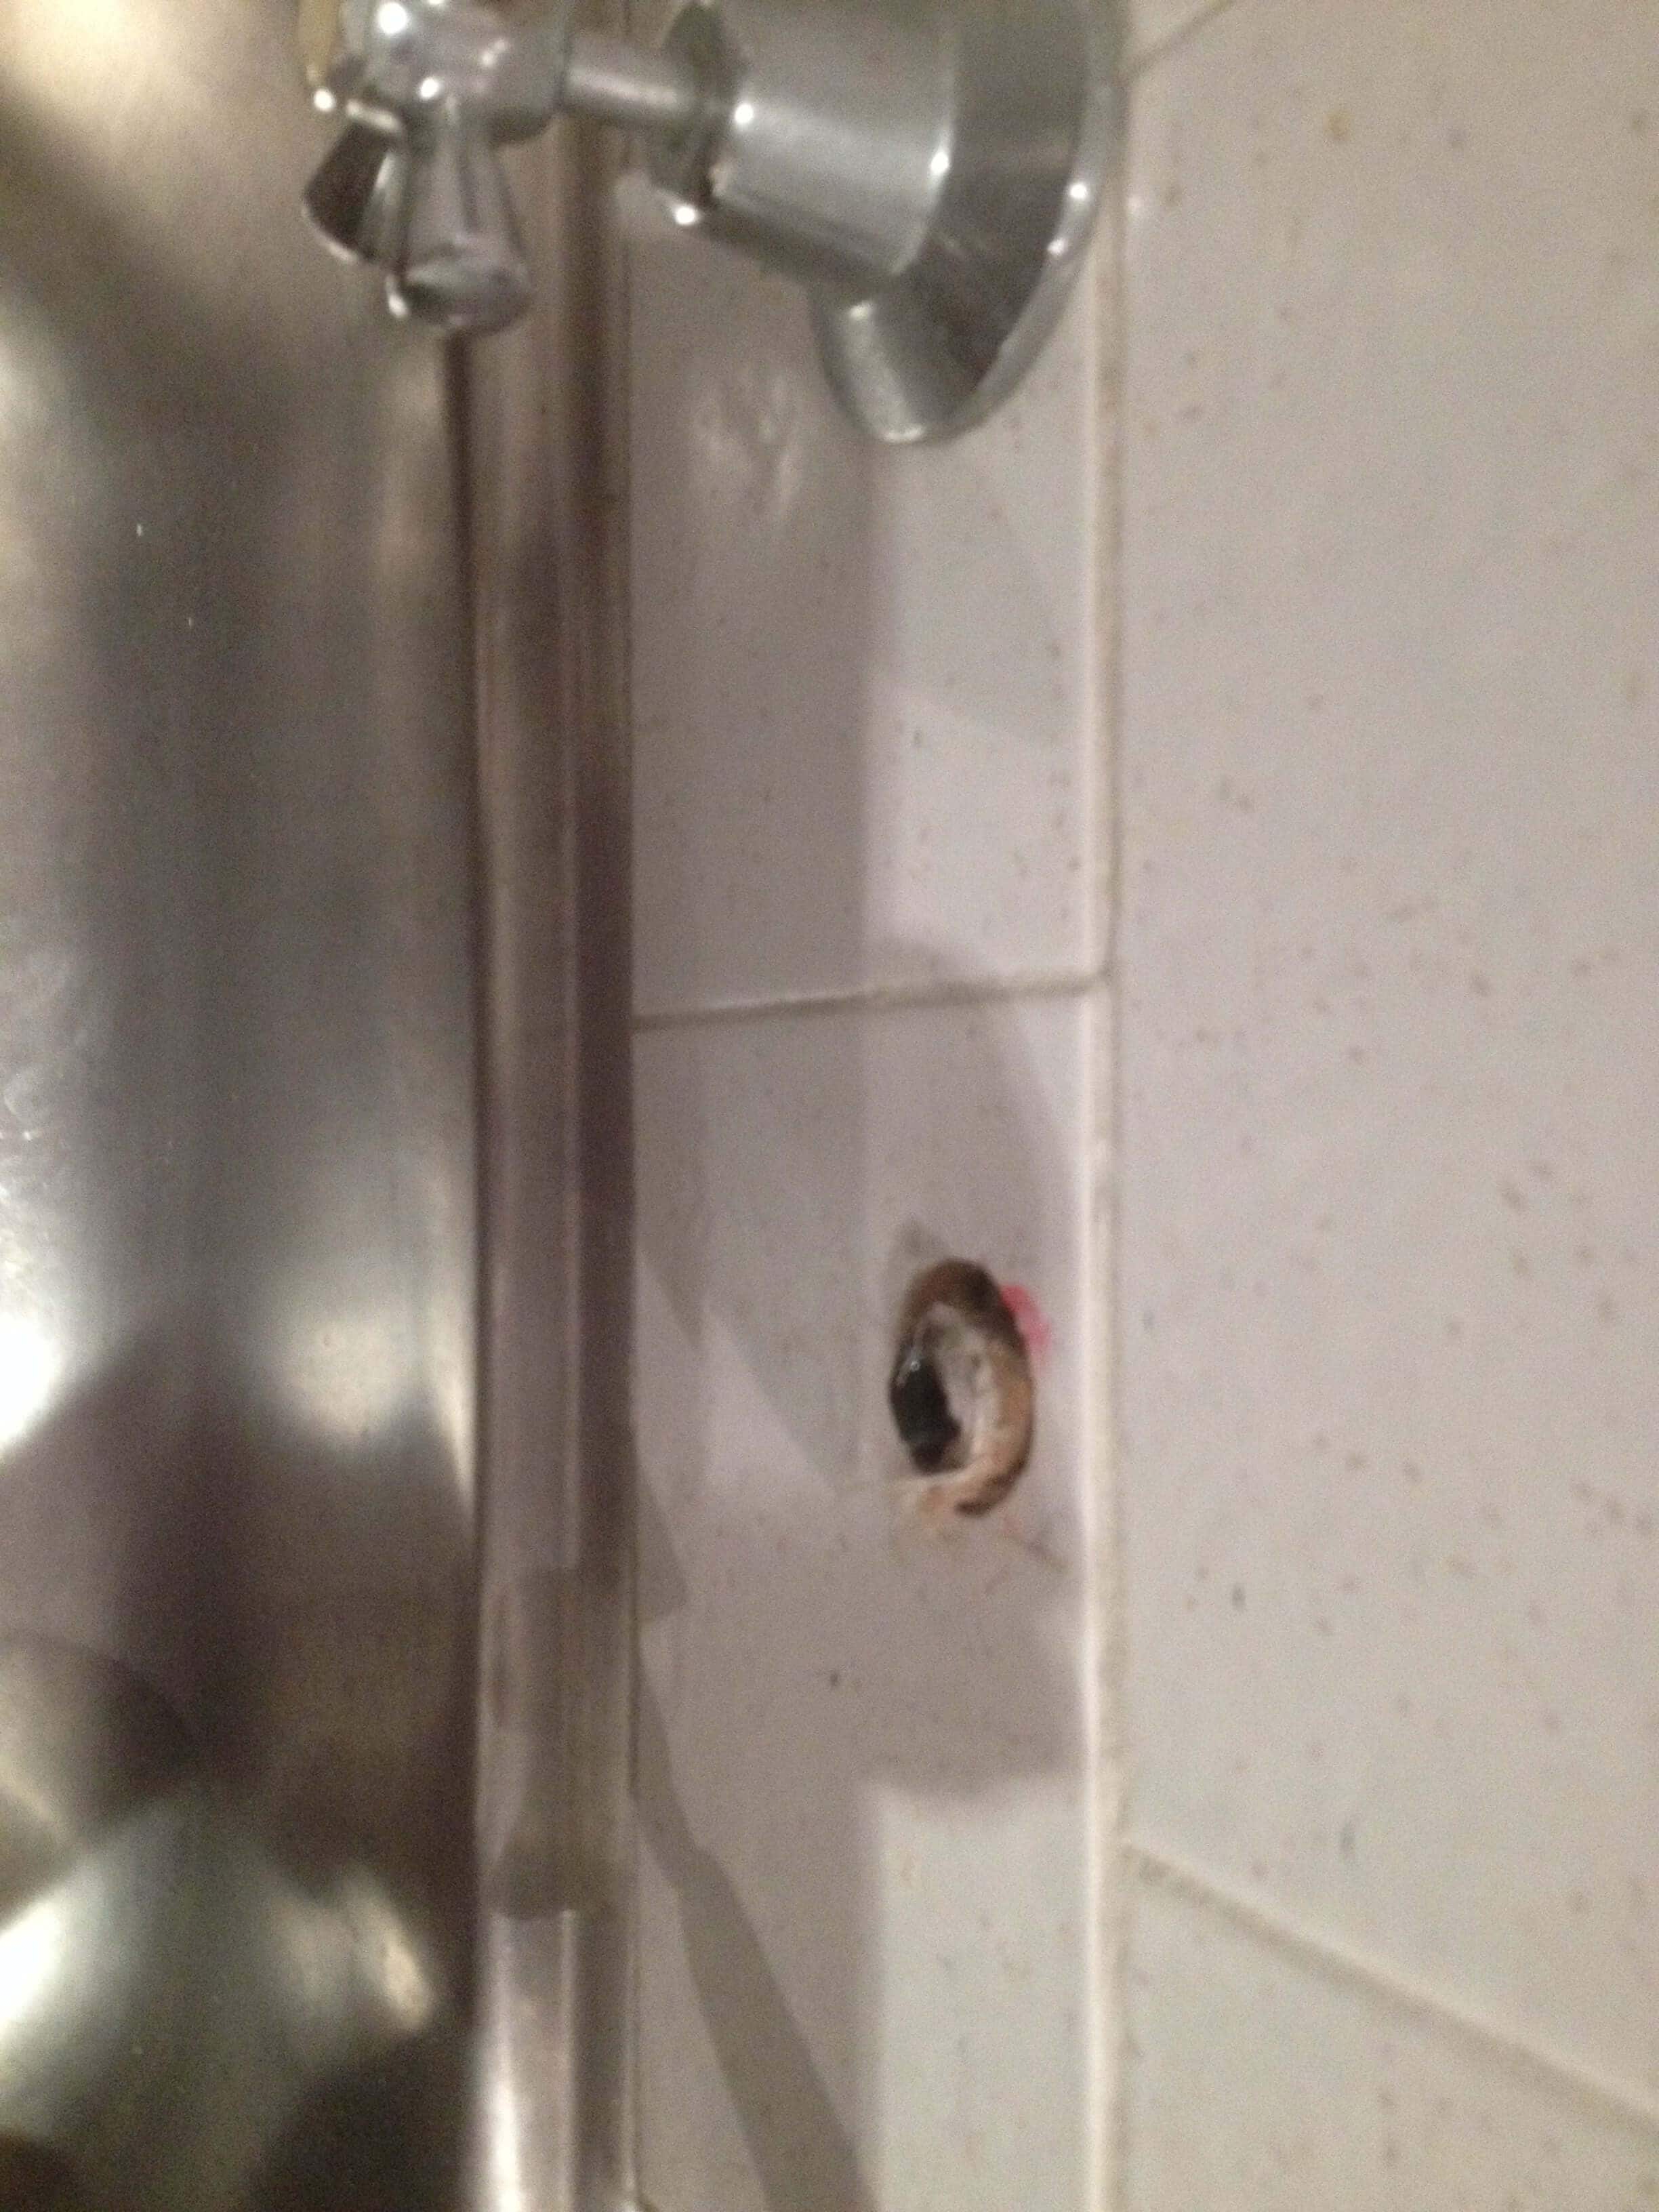 Everyday Plumbers Leaking Tap Repairs - Broken Tap Water Part 2284